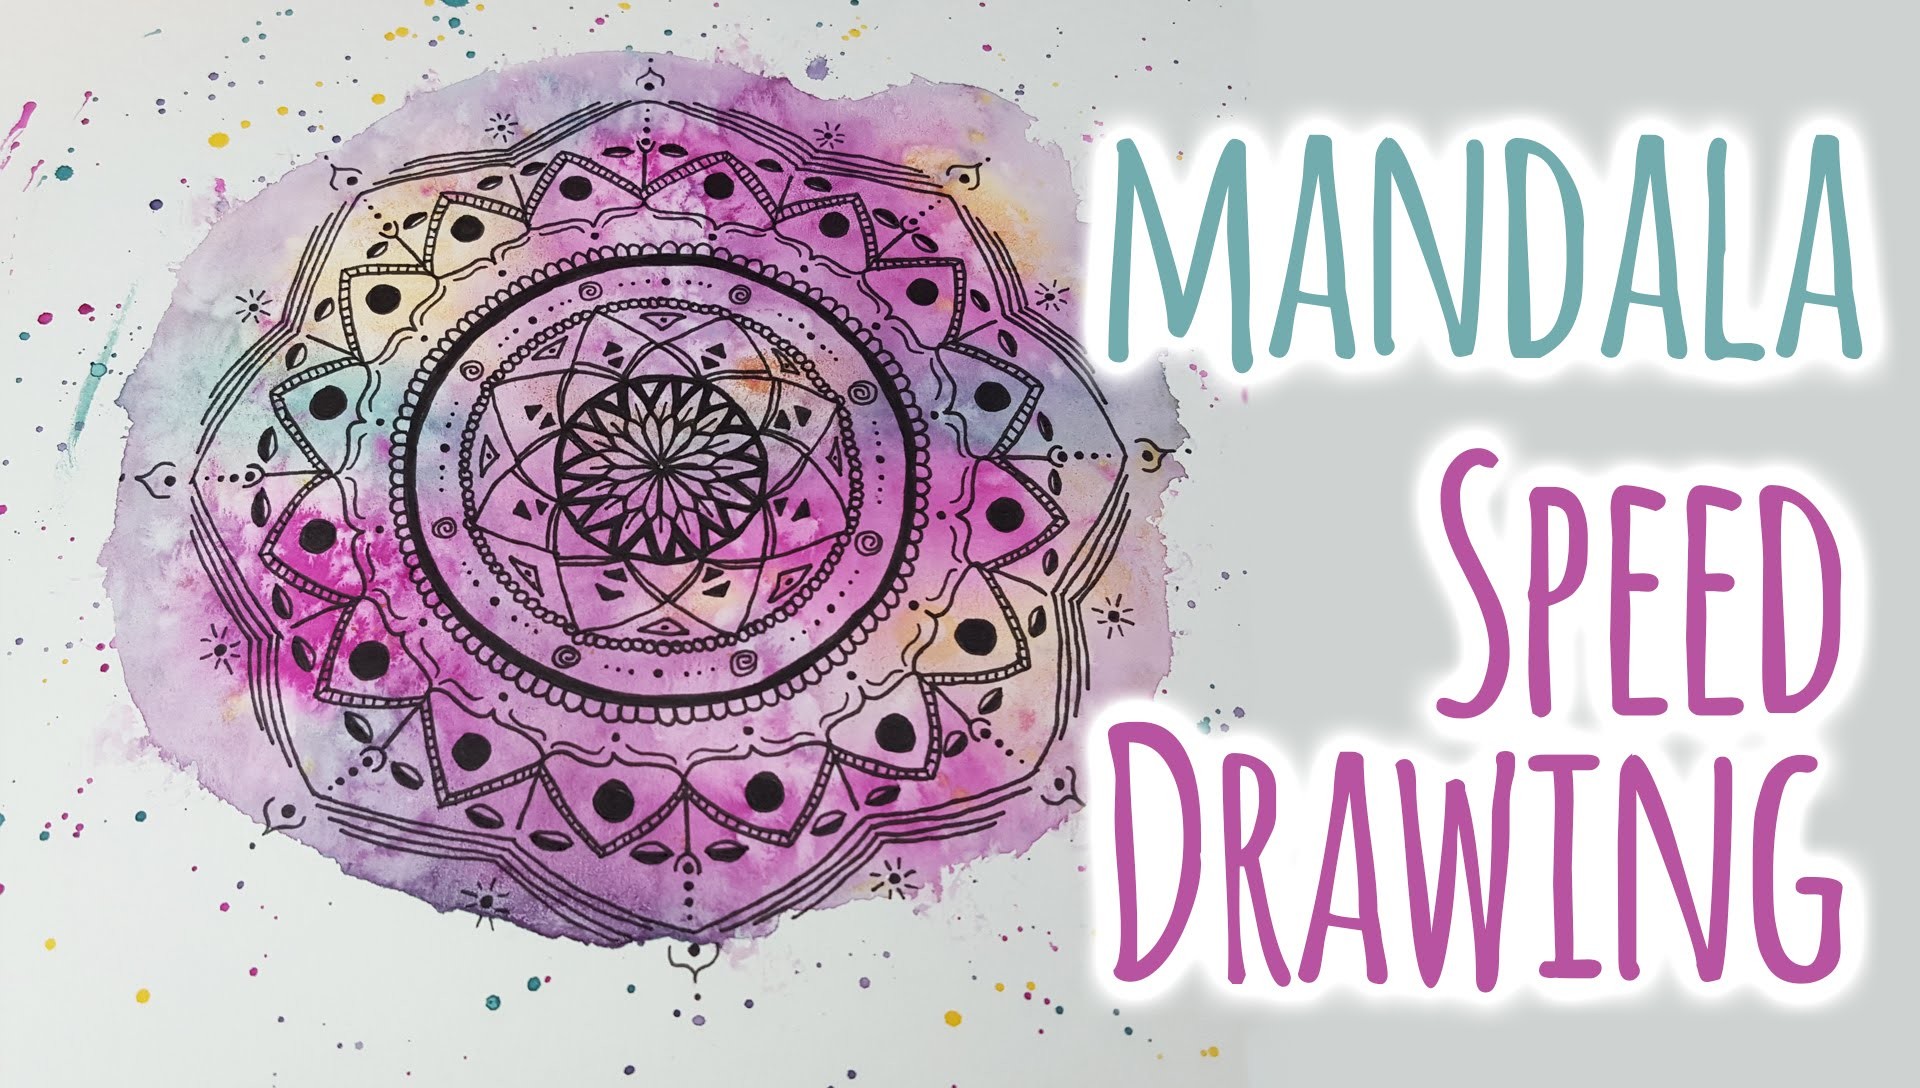 Speed Drawing ♥ Mandala on Watercolor ♥  Tattoo Design - DIY | Colorful